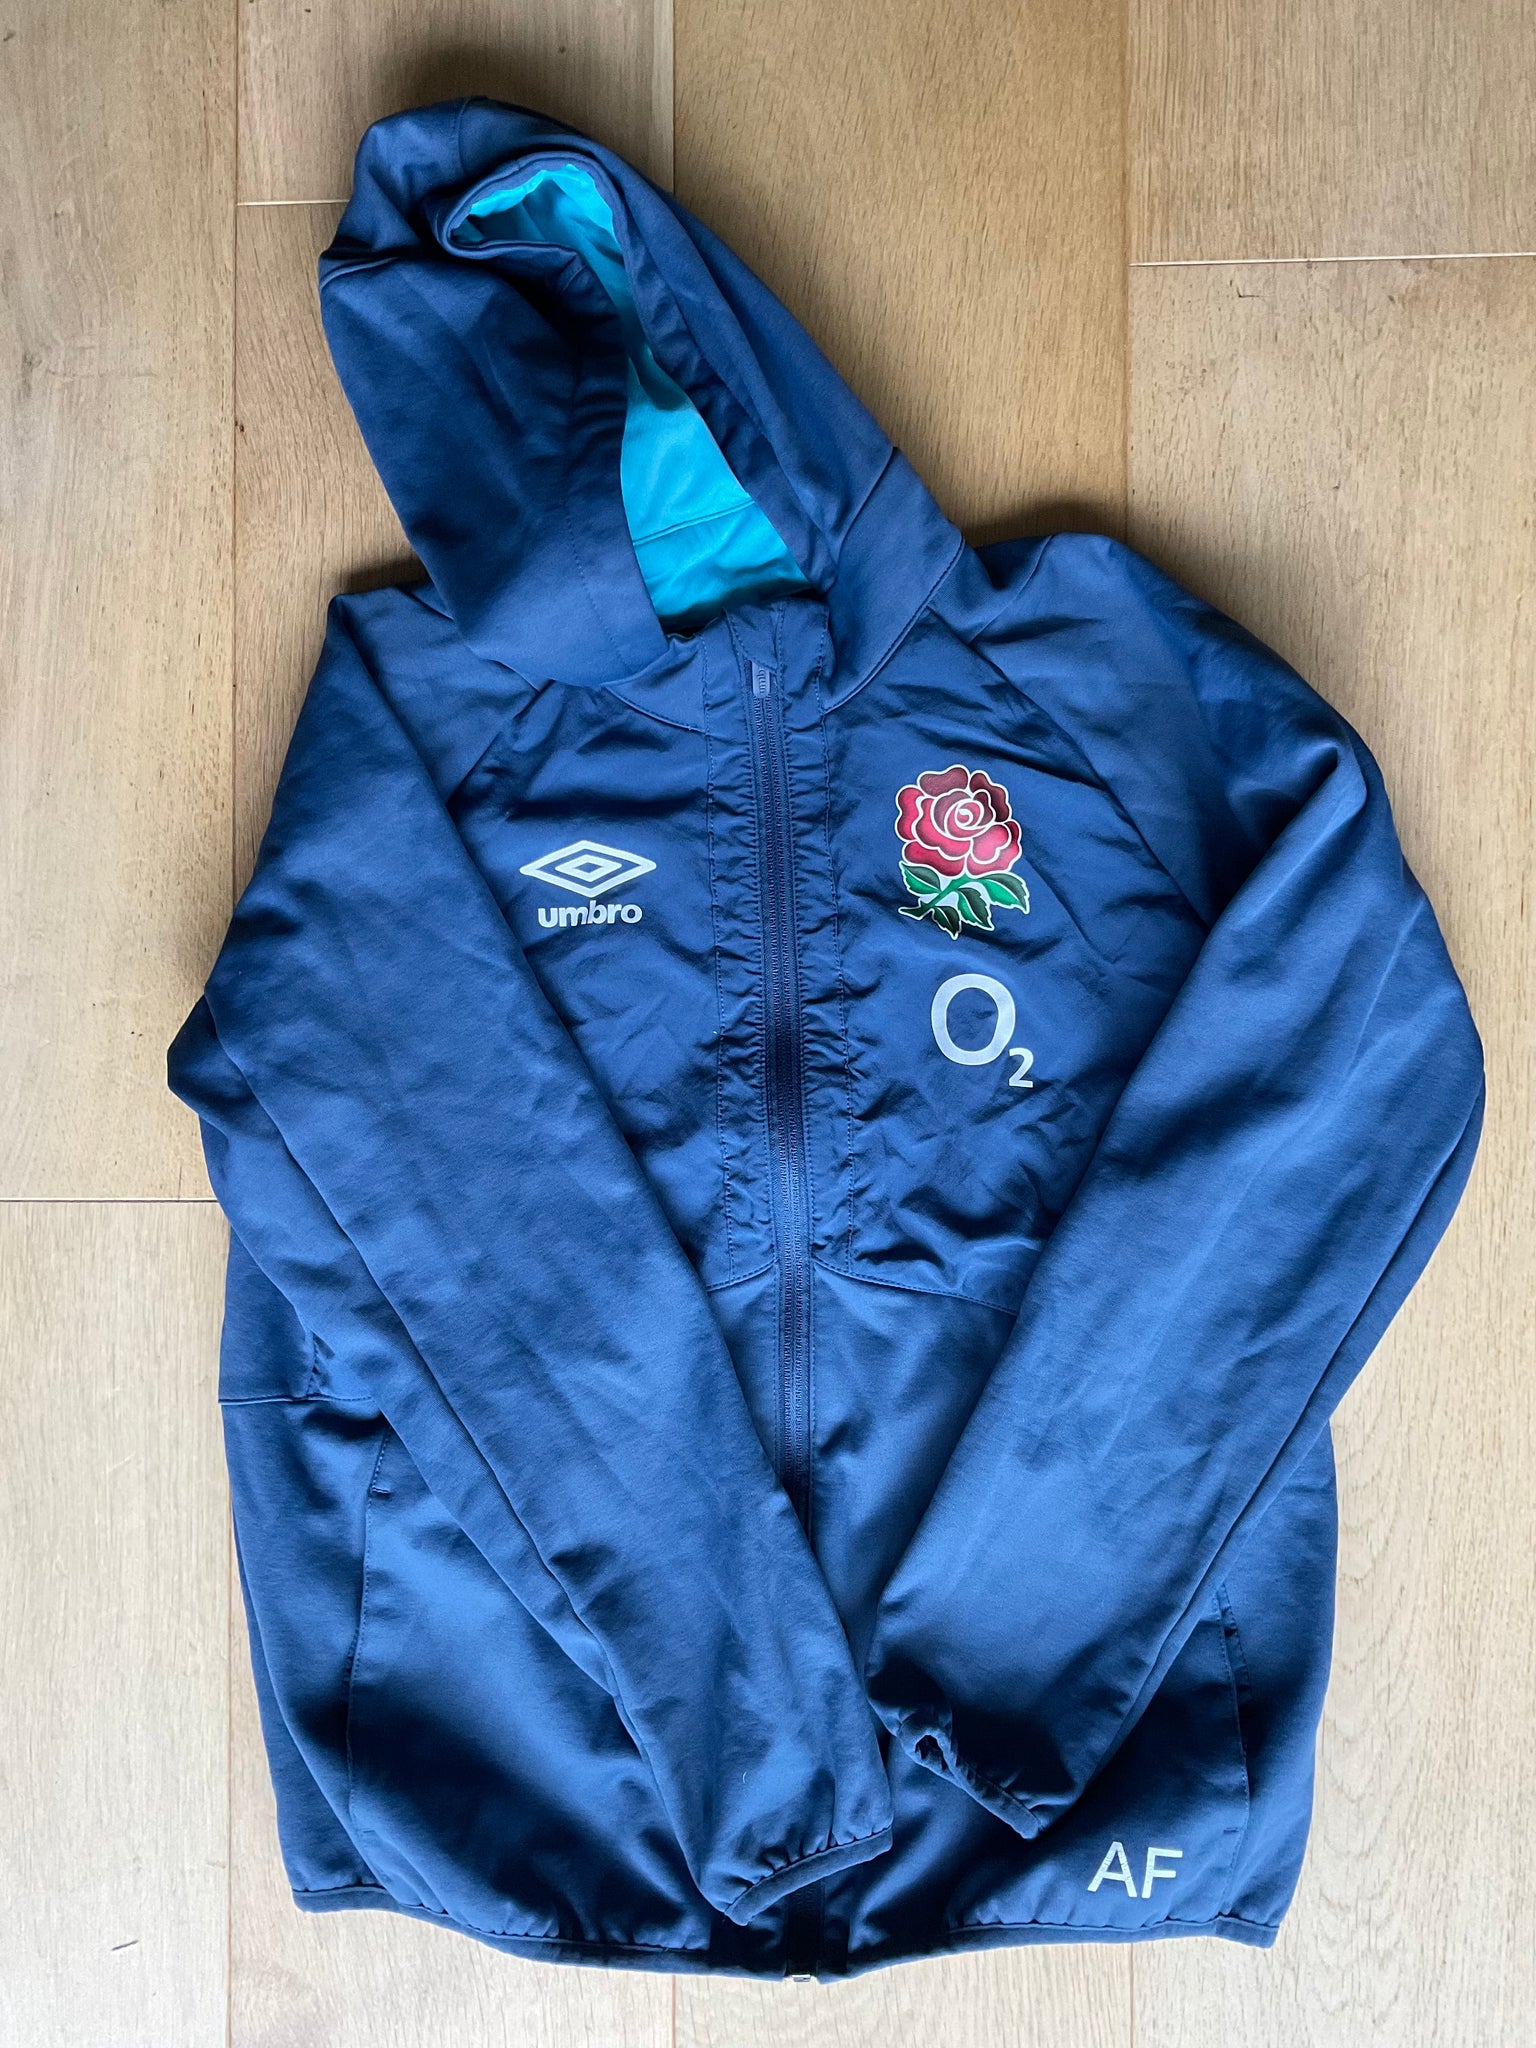 AF Initials - England Rugby Fleece Lined Full Zip Jacket [Teal]